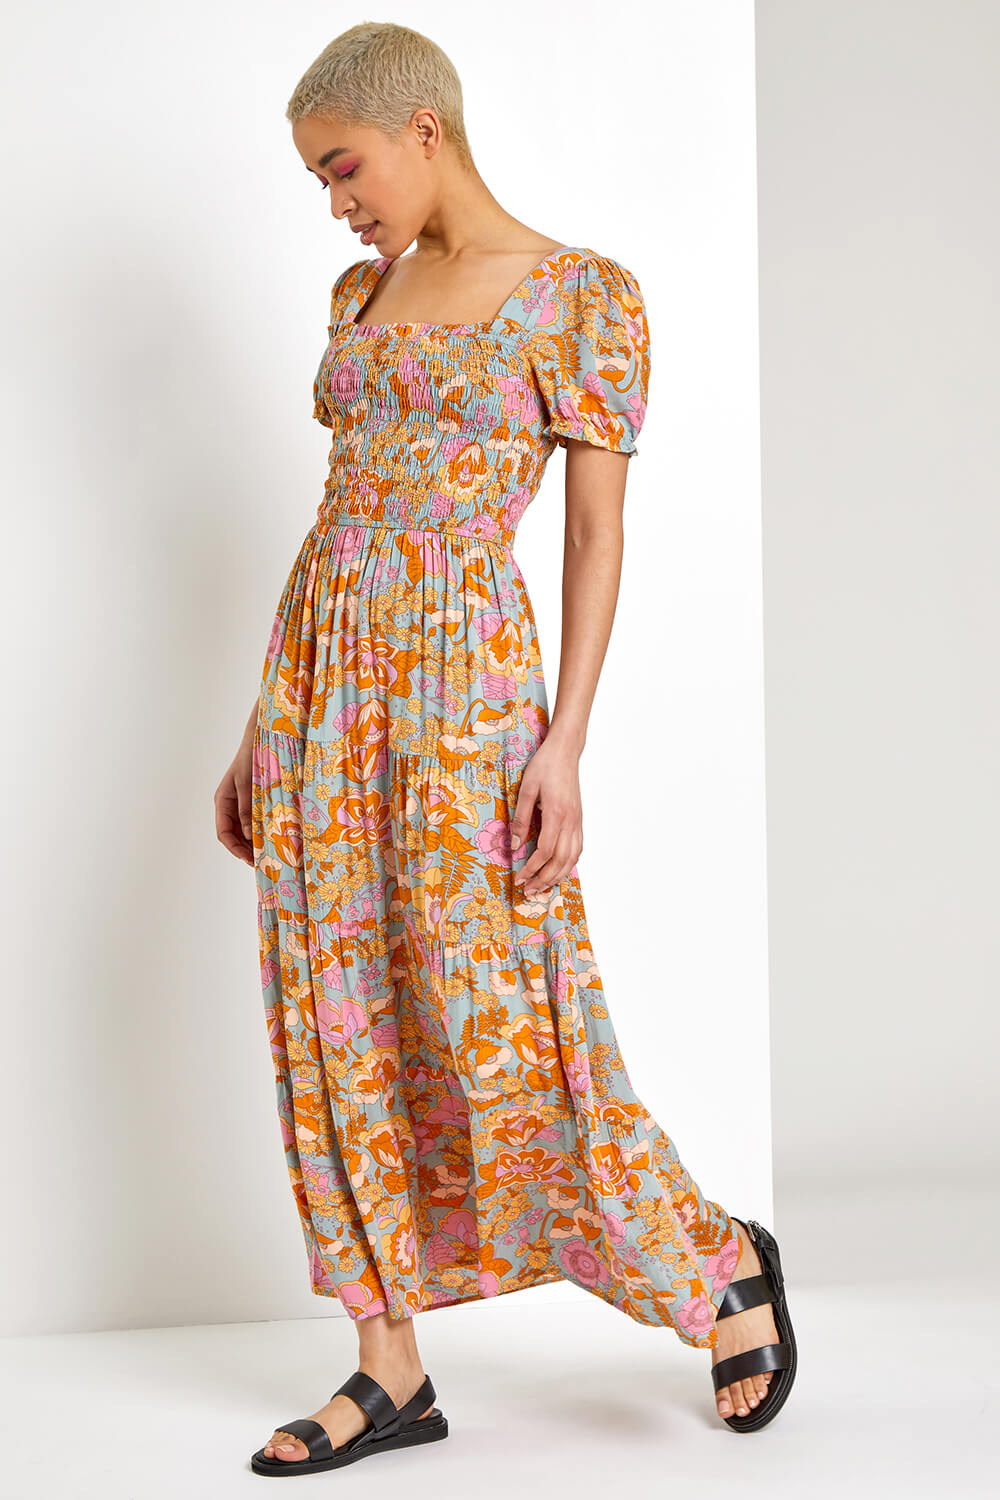 ORANGE Retro Floral Print Tiered Maxi Dress, Image 2 of 5